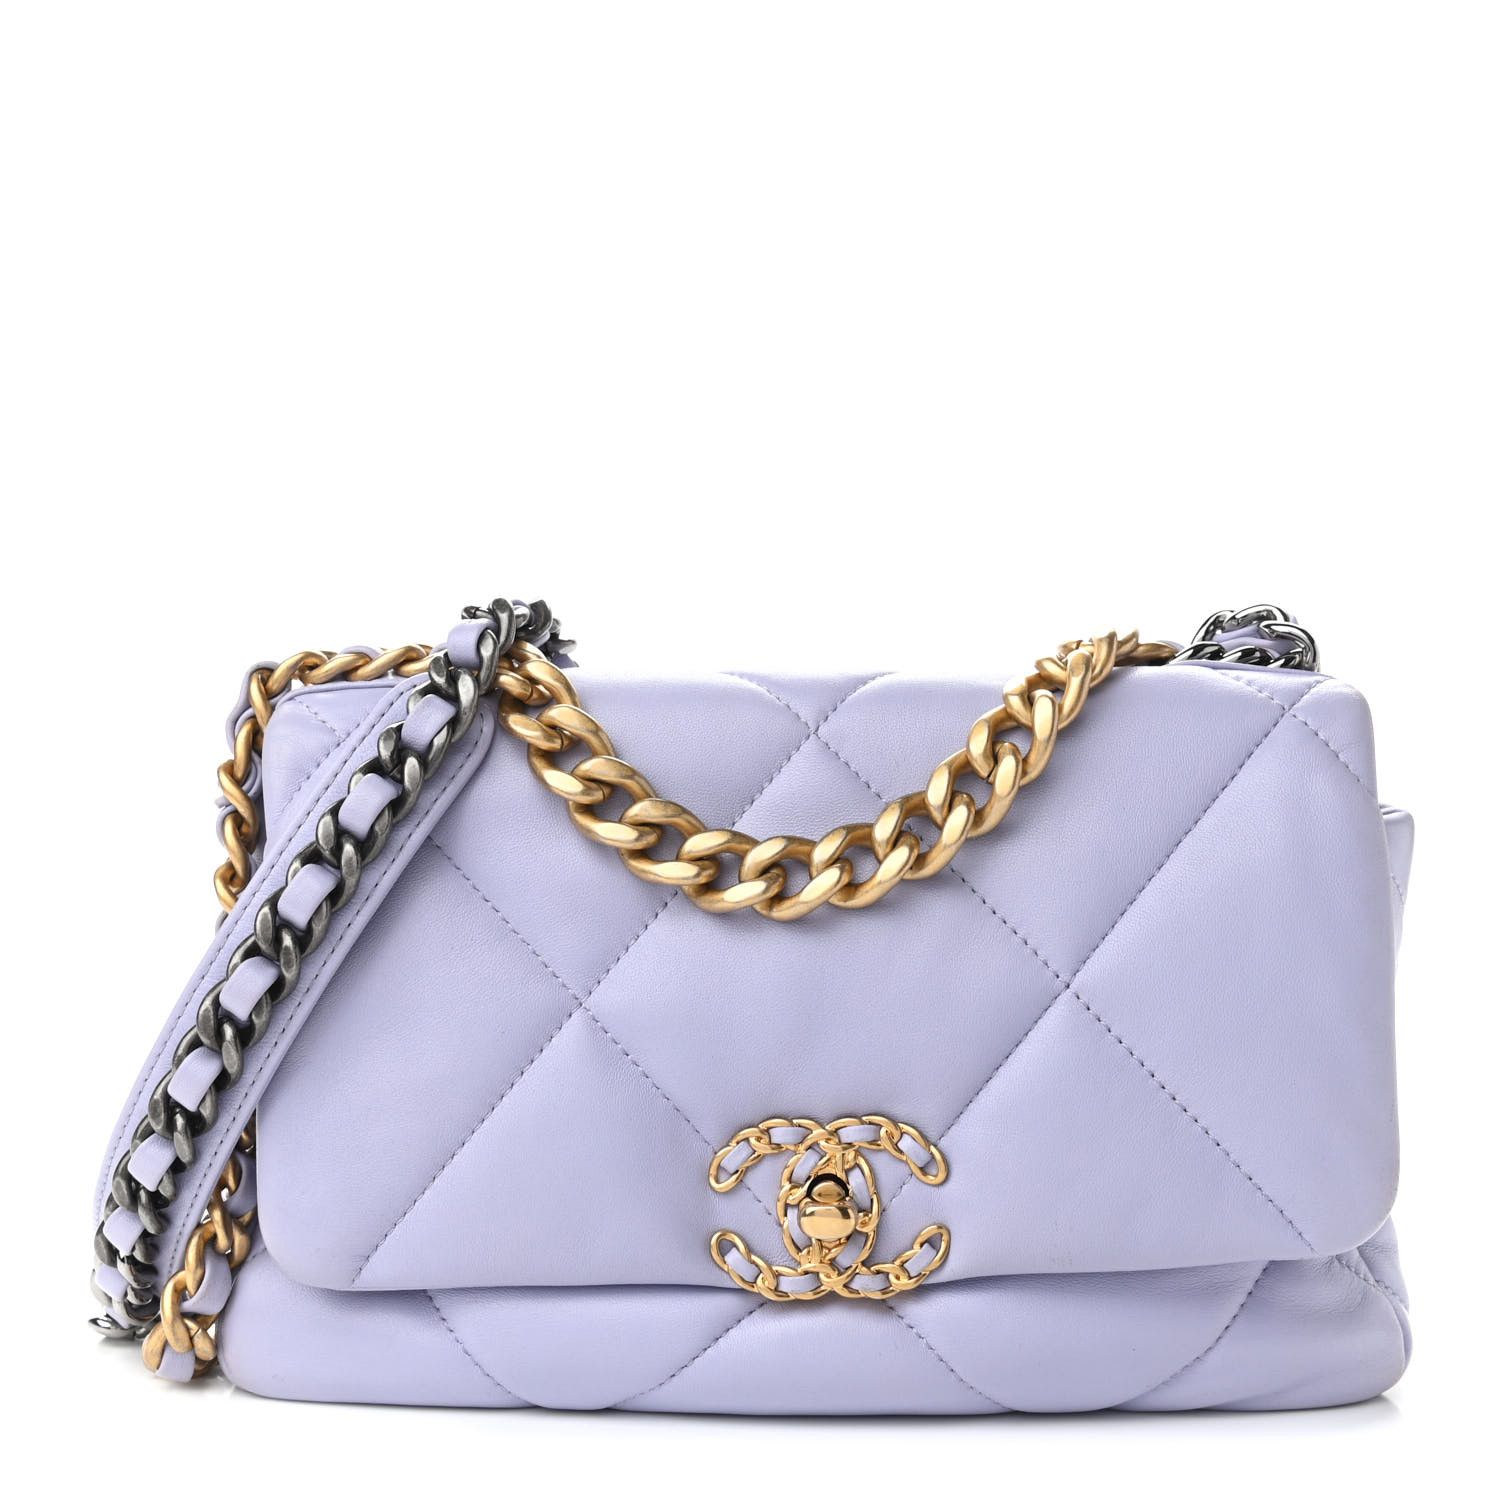 CHANEL Lambskin Quilted Medium Chanel 19 Flap Light Purple | FASHIONPHILE | Fashionphile